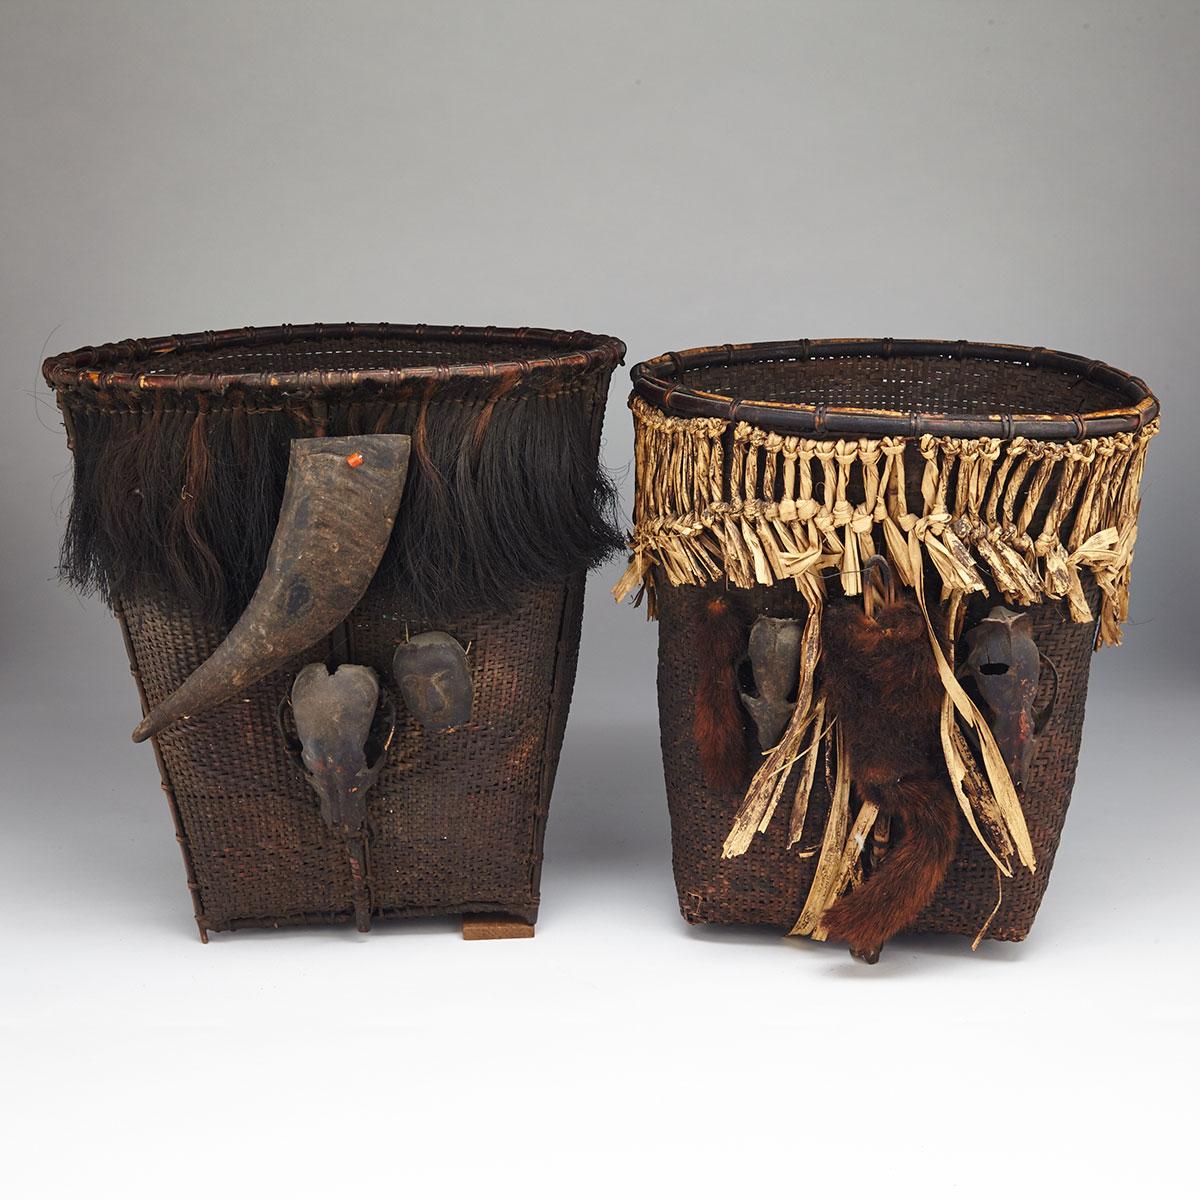 Two Nagaland Head Baskets, 19th/20th century